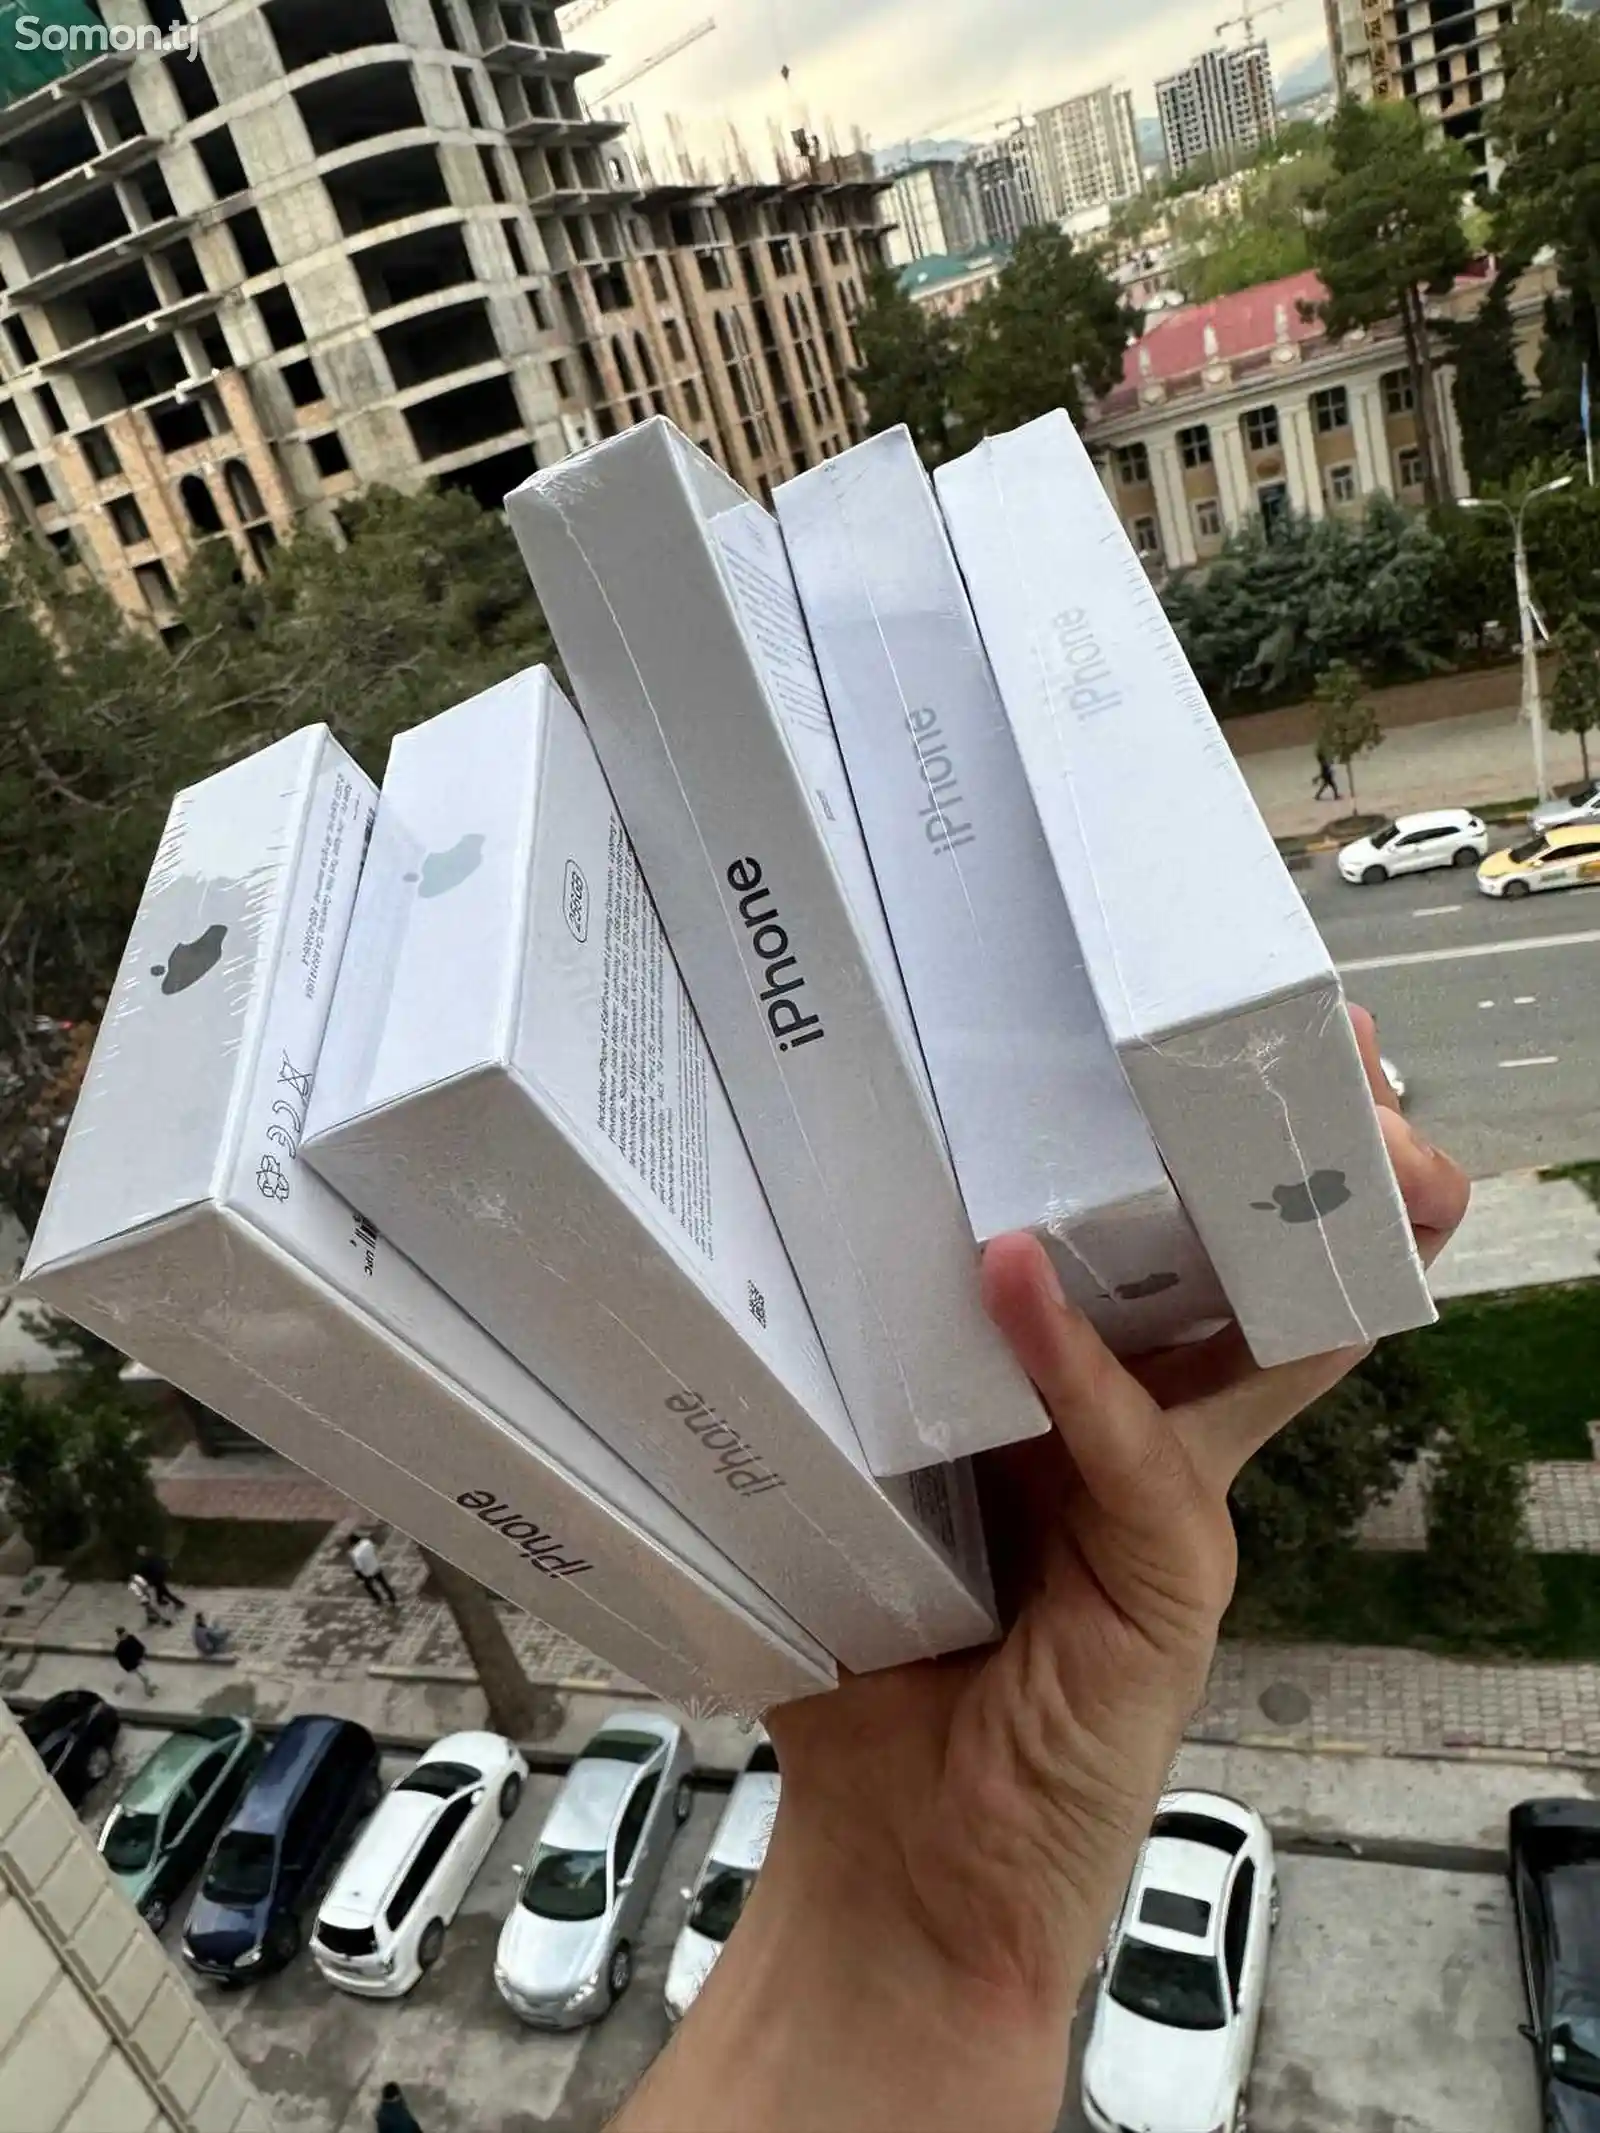 Apple iPhone X, 256 gb, Space Grey-2